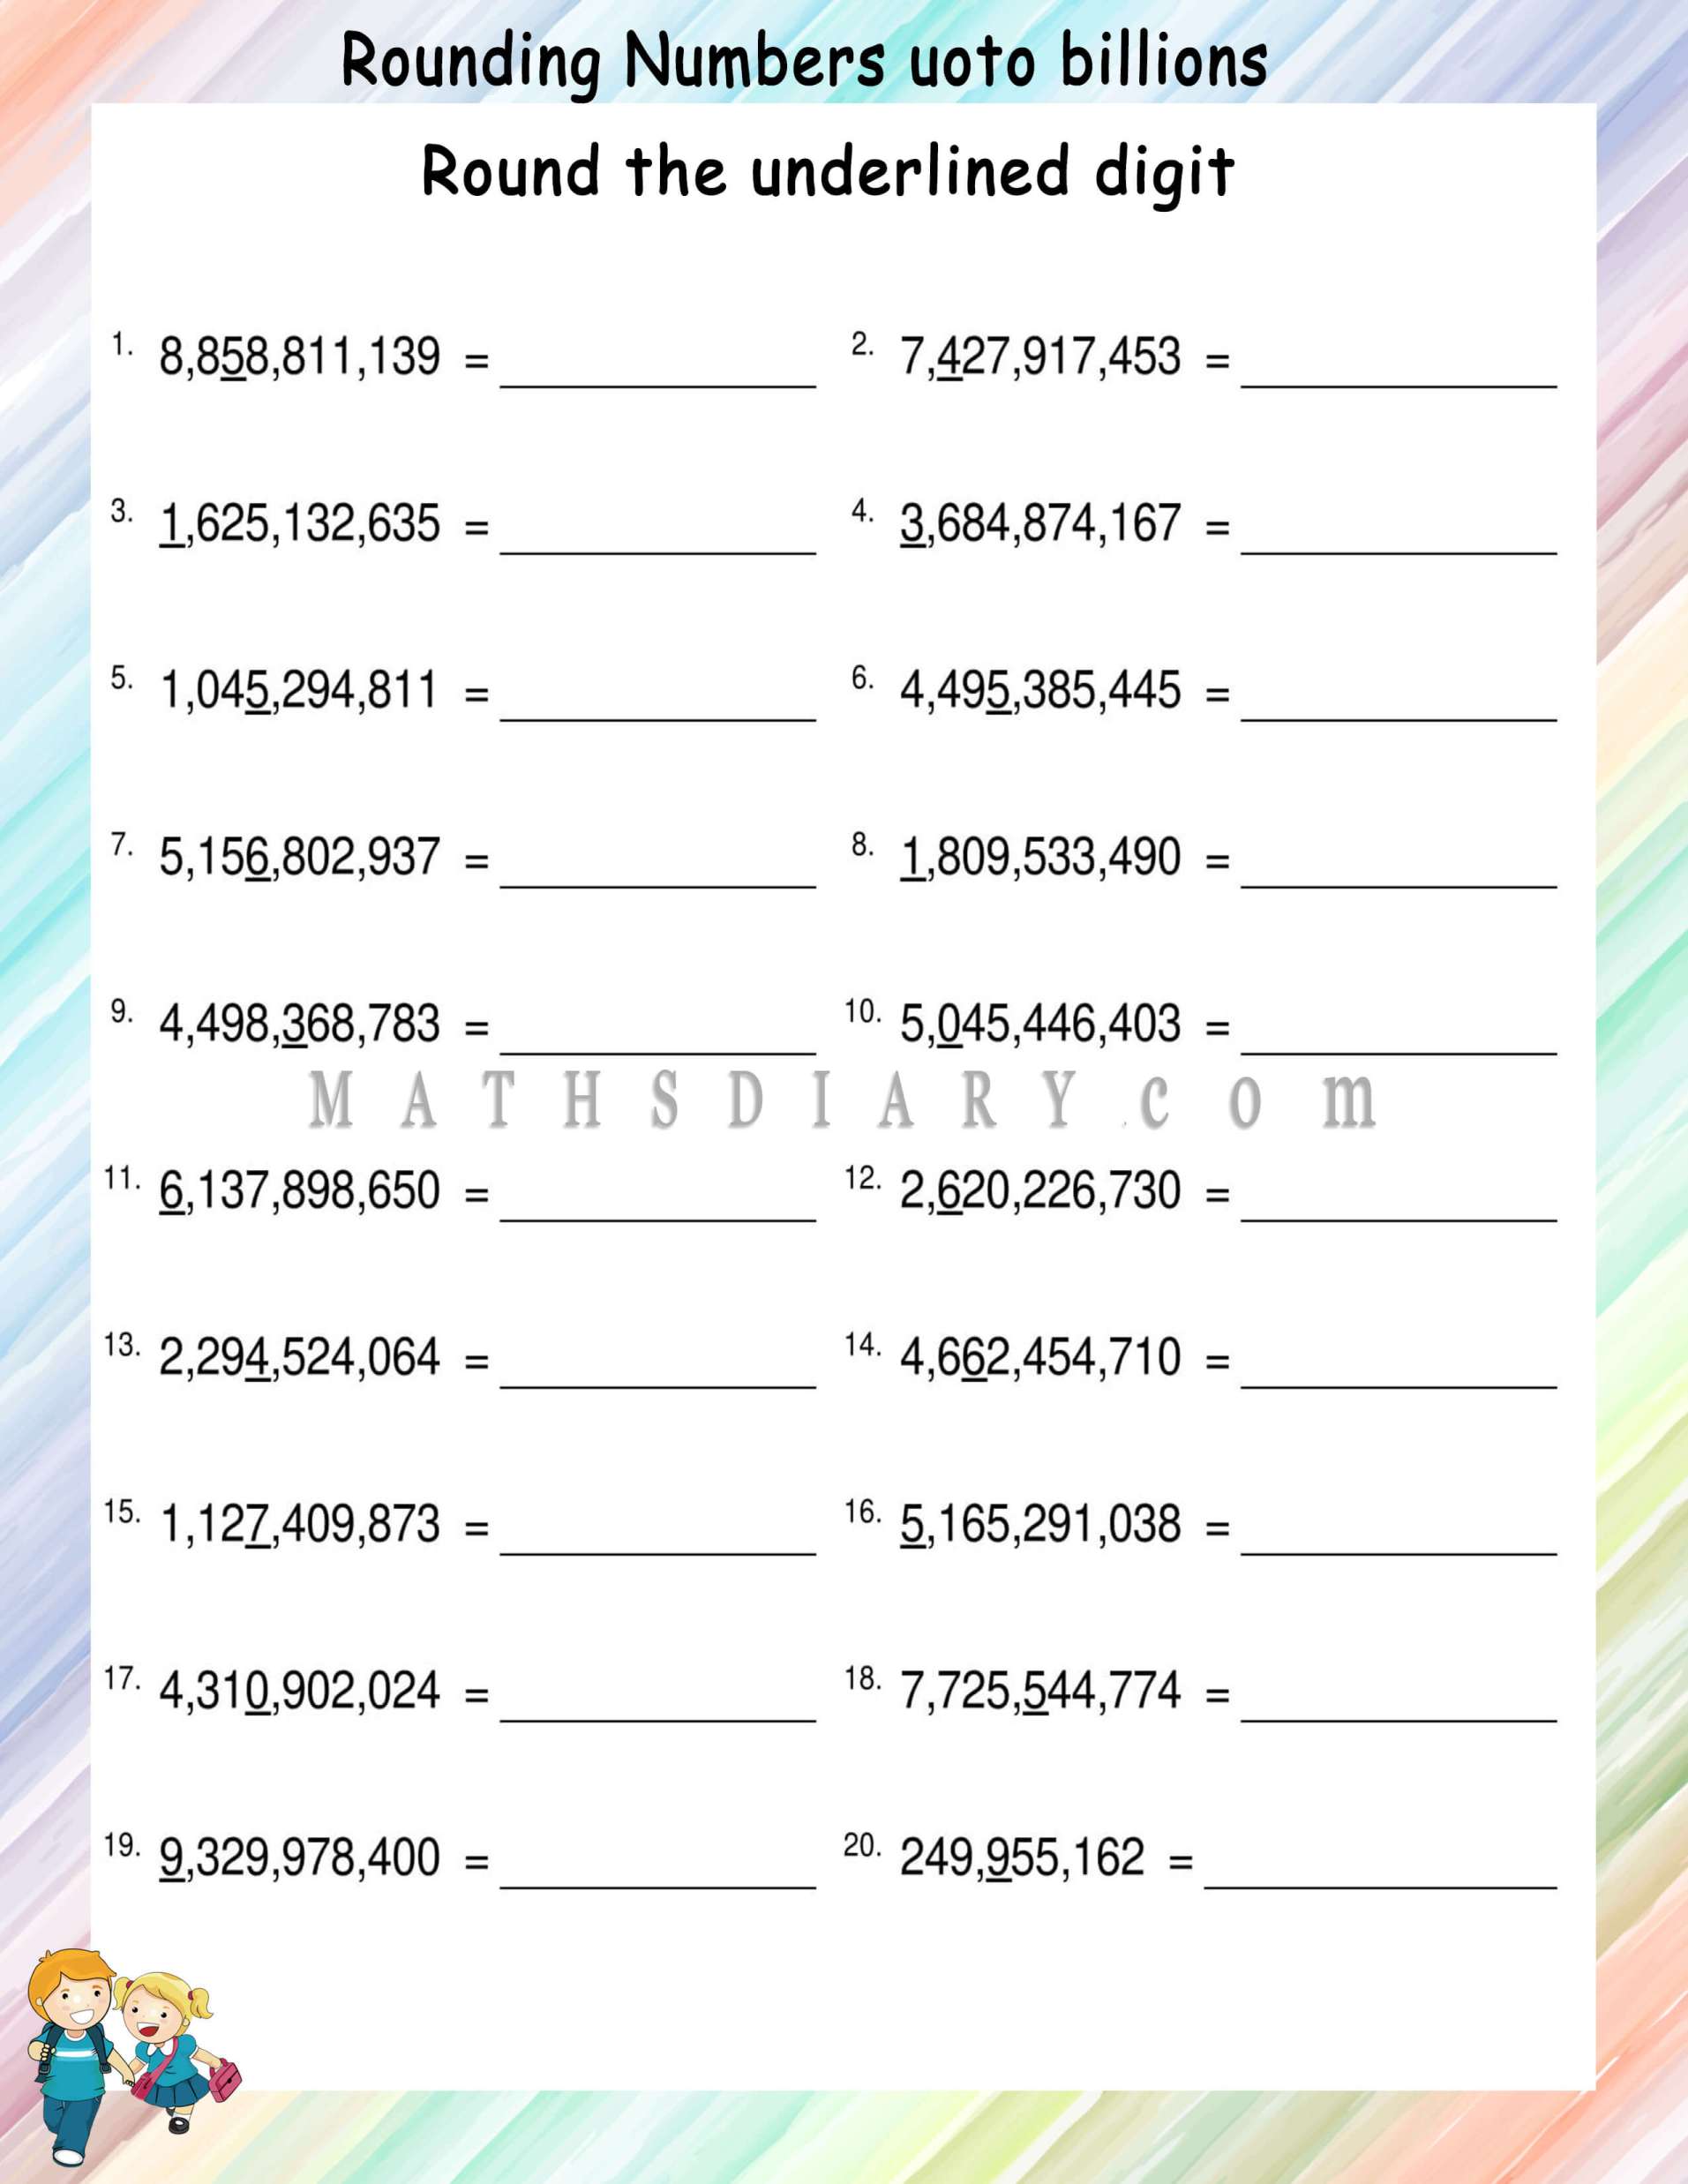 rounding-numbers-upto-billions-math-worksheets-mathsdiary